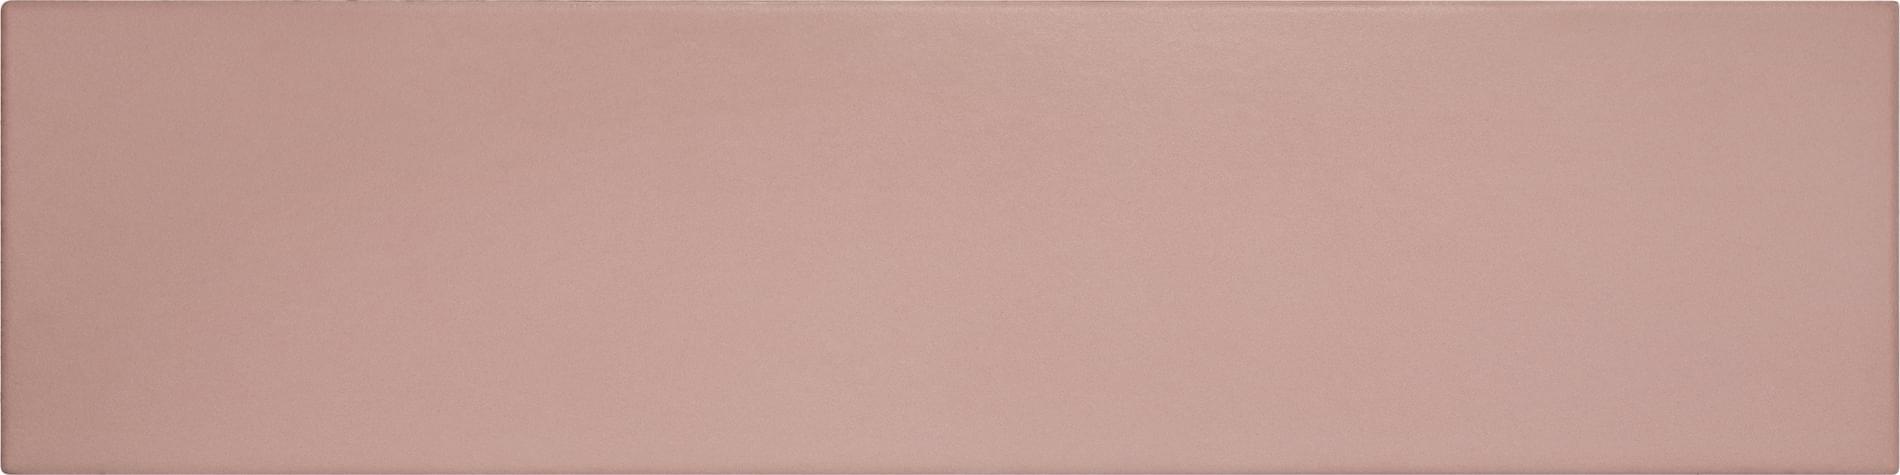 Equipe Stromboli Rose Breeze Распродажа 9.2x36.8